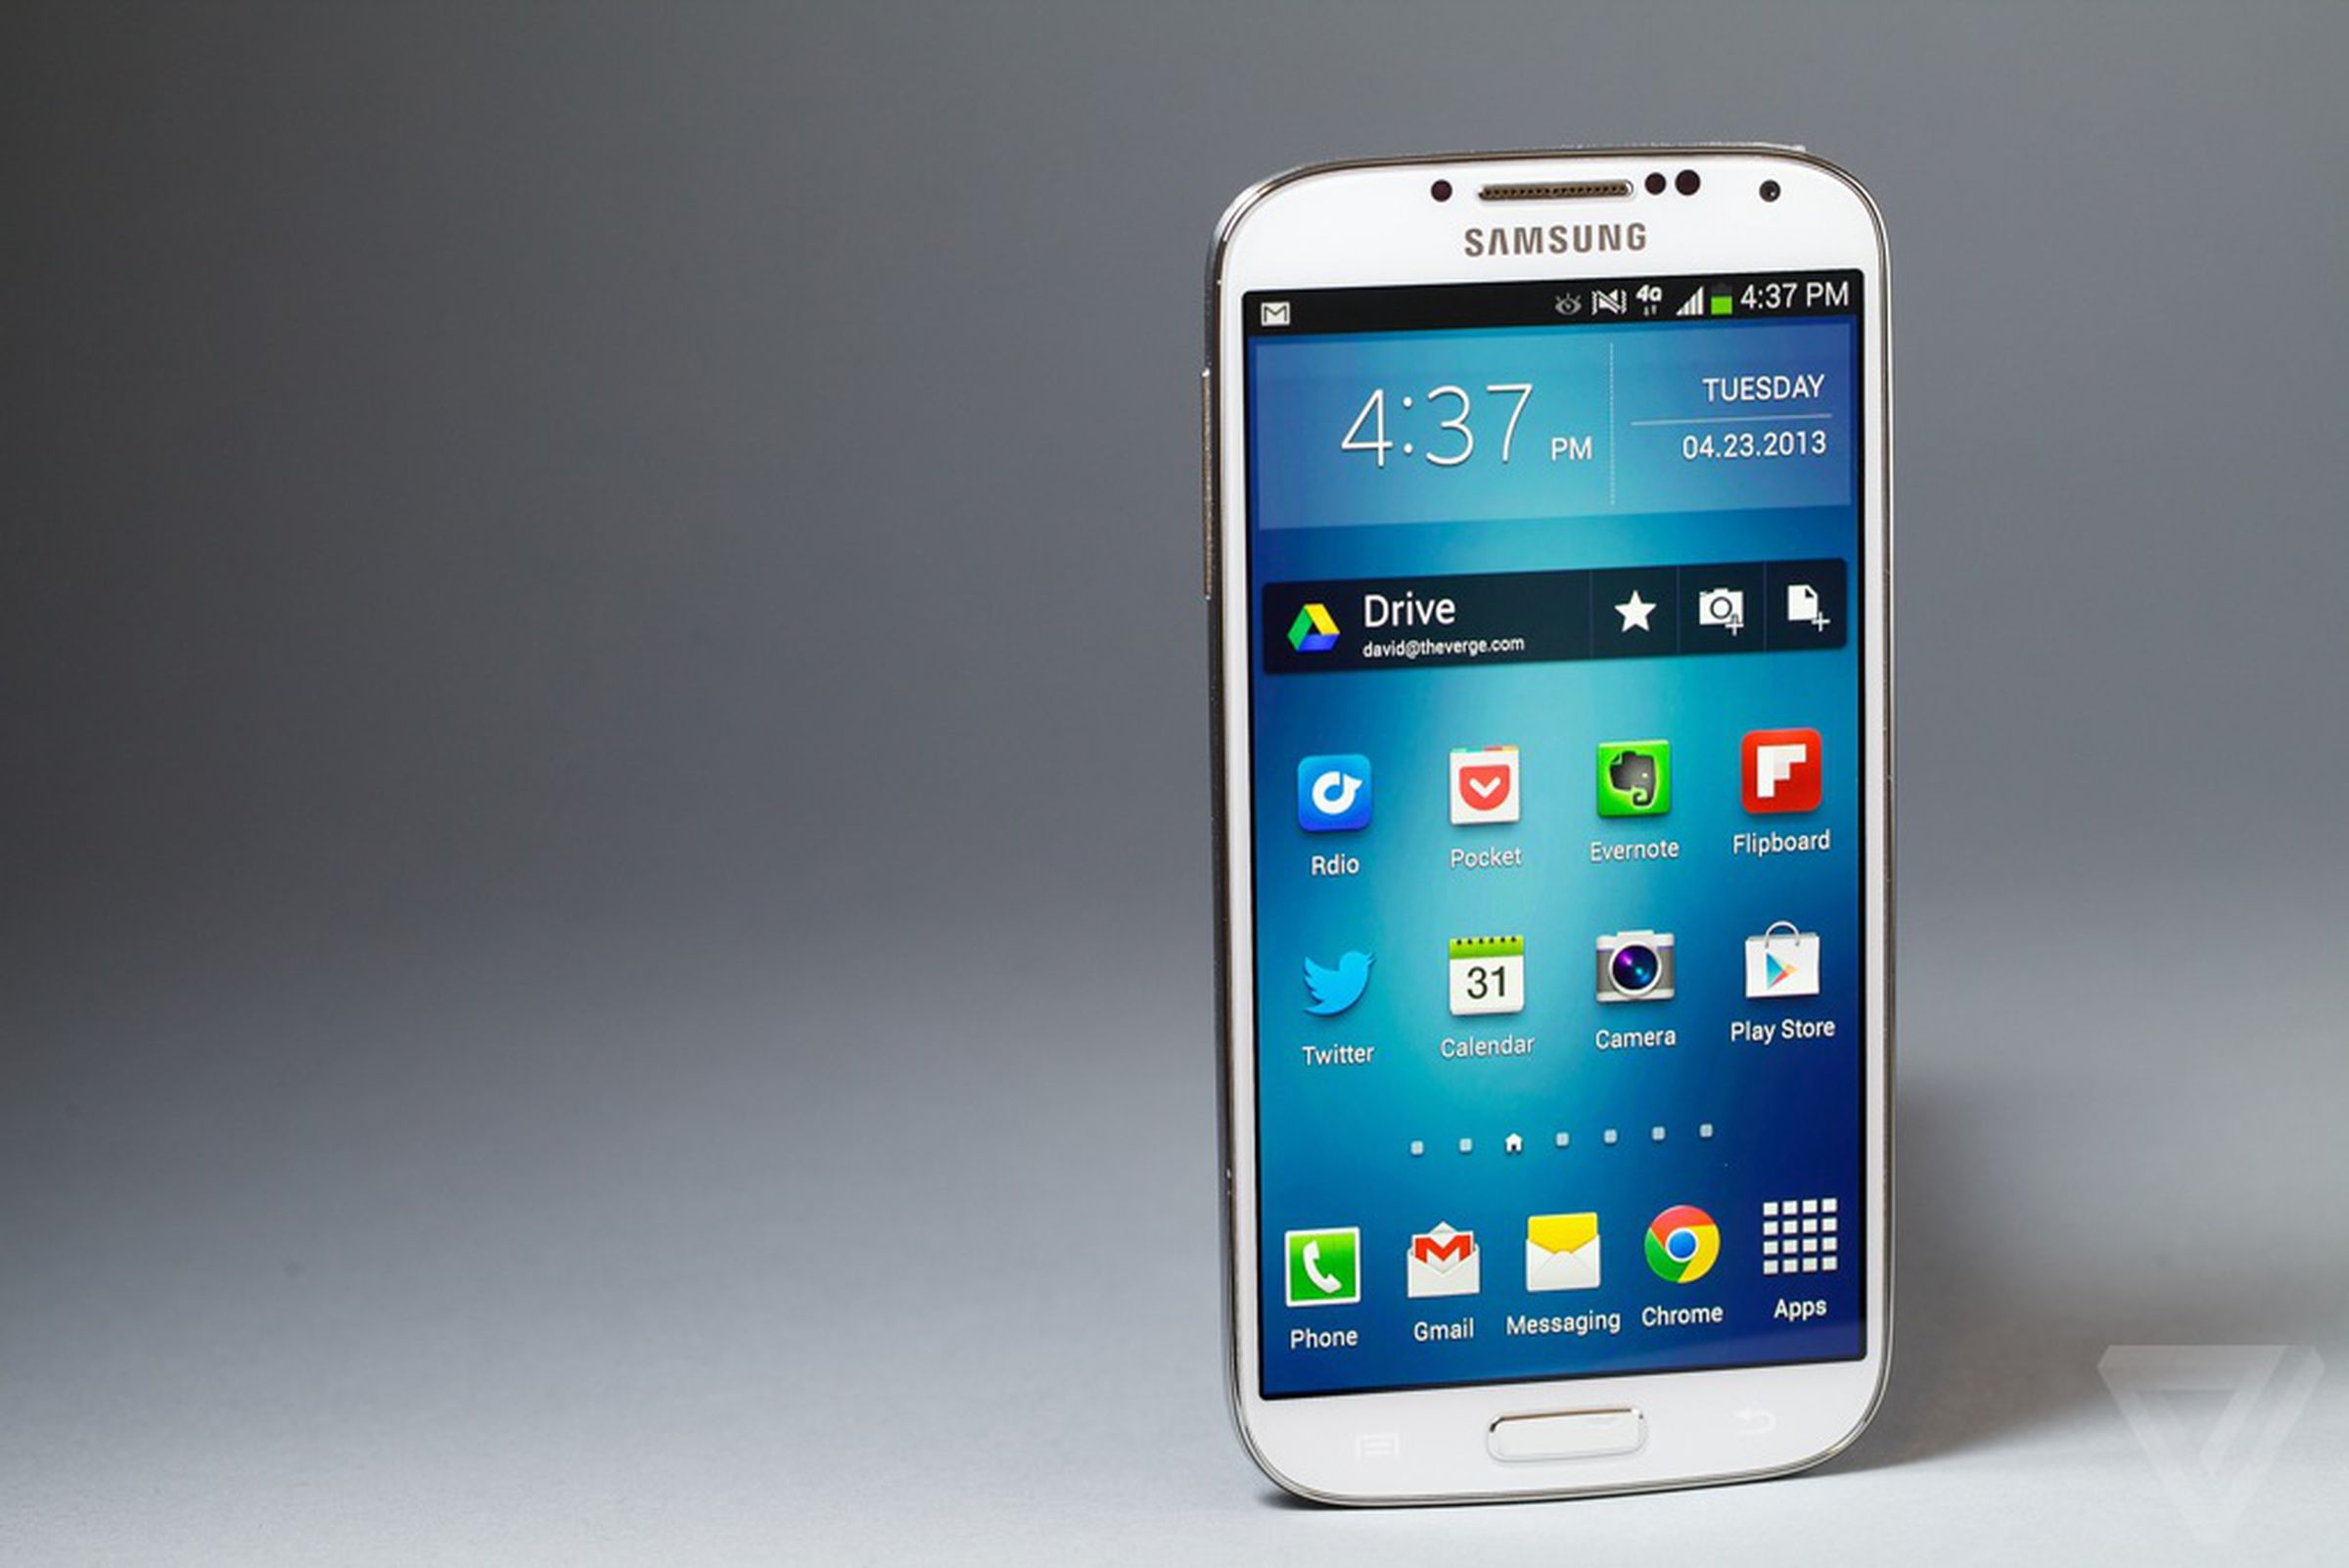 Samsung Galaxy S4 hands-on photos